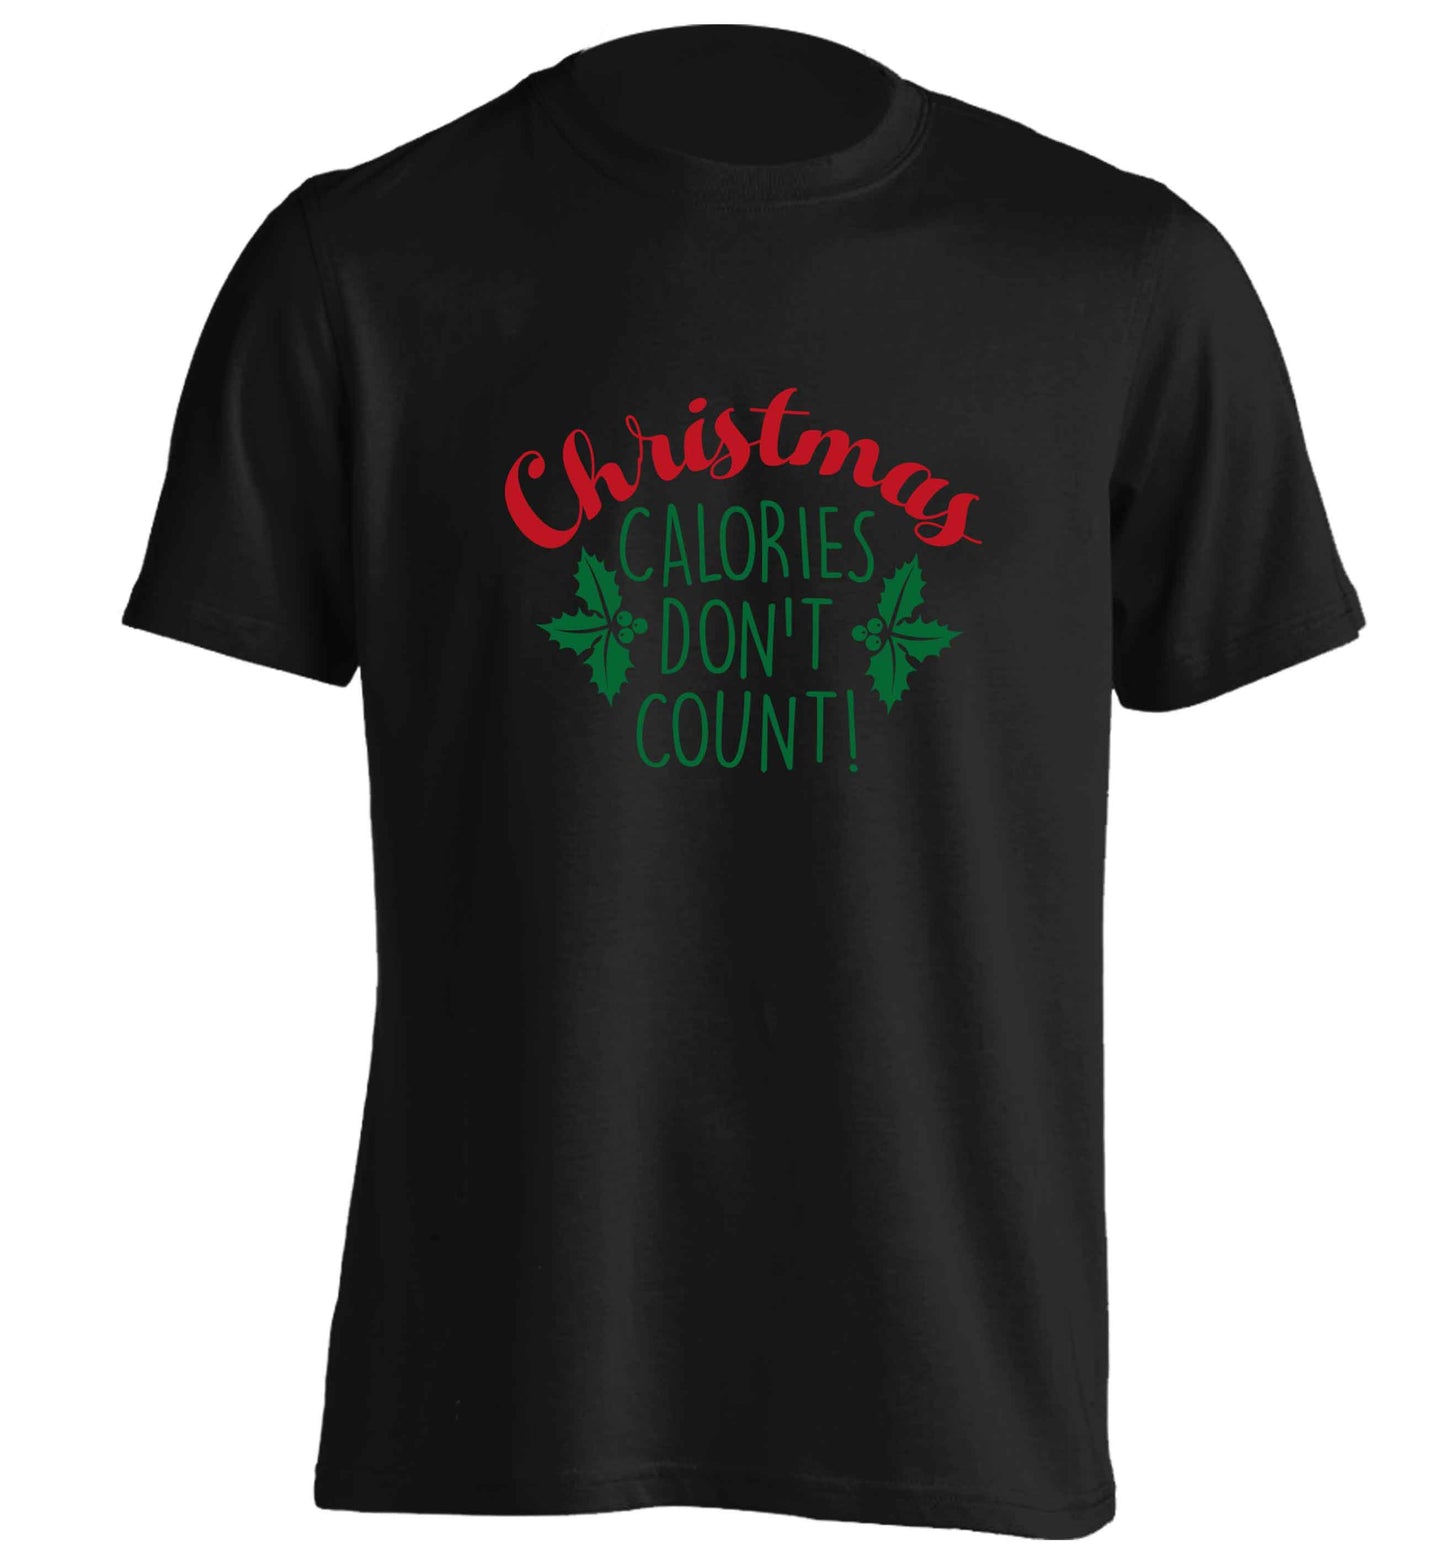 Christmas calories don't count adults unisex black Tshirt 2XL